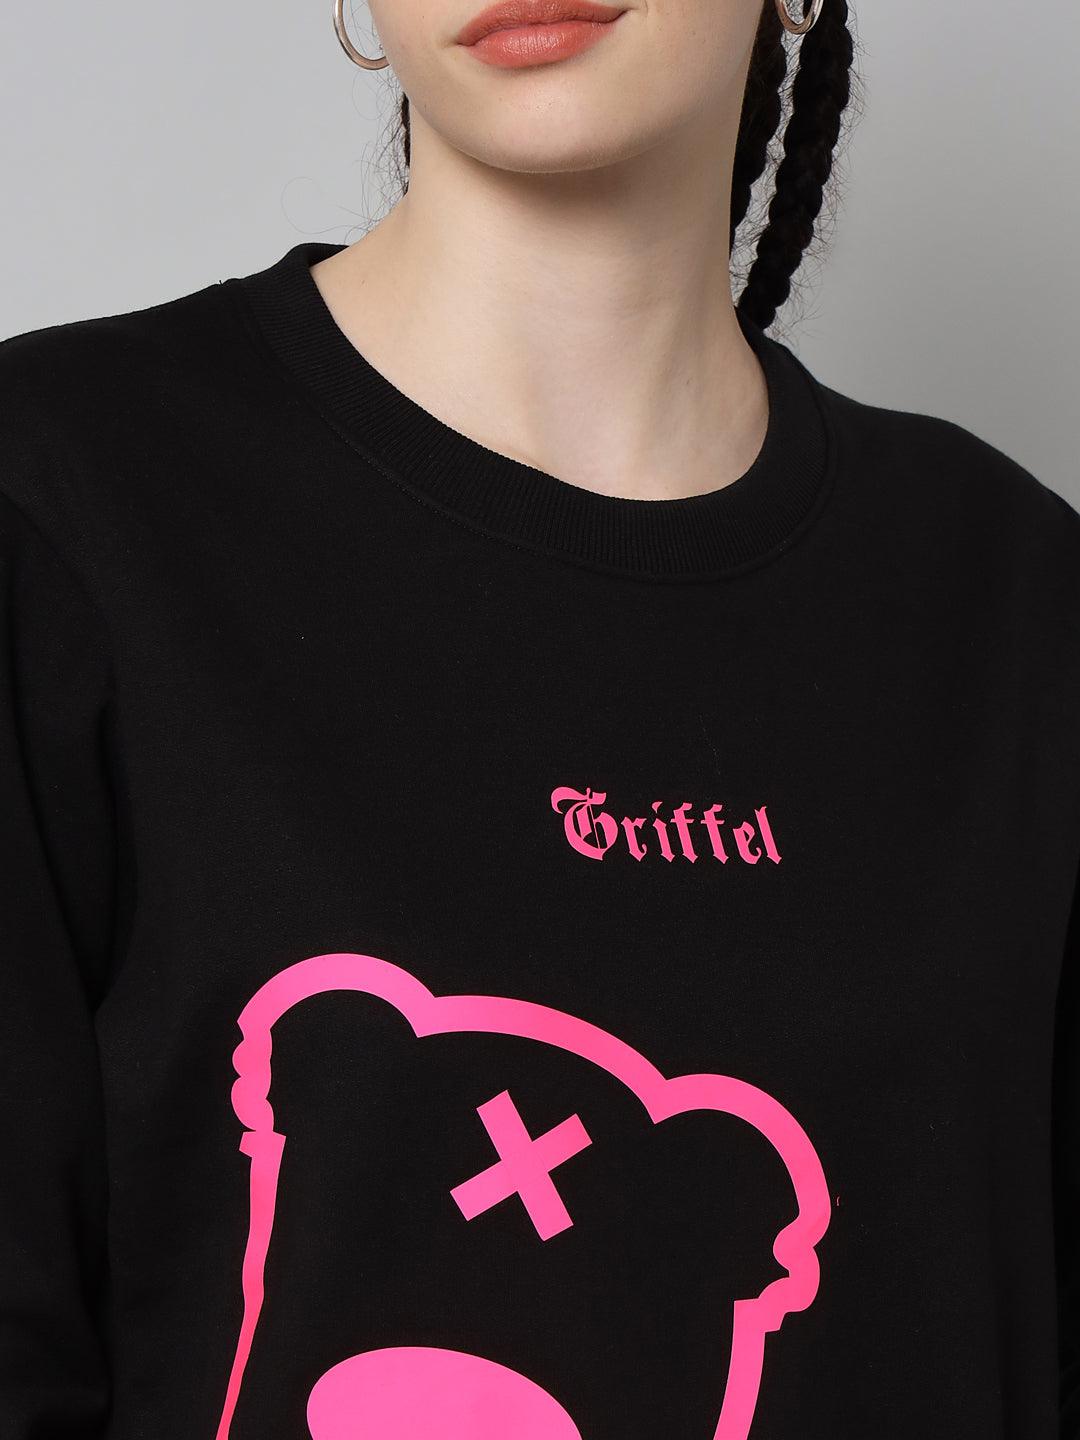 Griffel Women’s Teddy Print Round Neck Pink Black Cotton Fleece Full Sleeve Sweatshirt - griffel